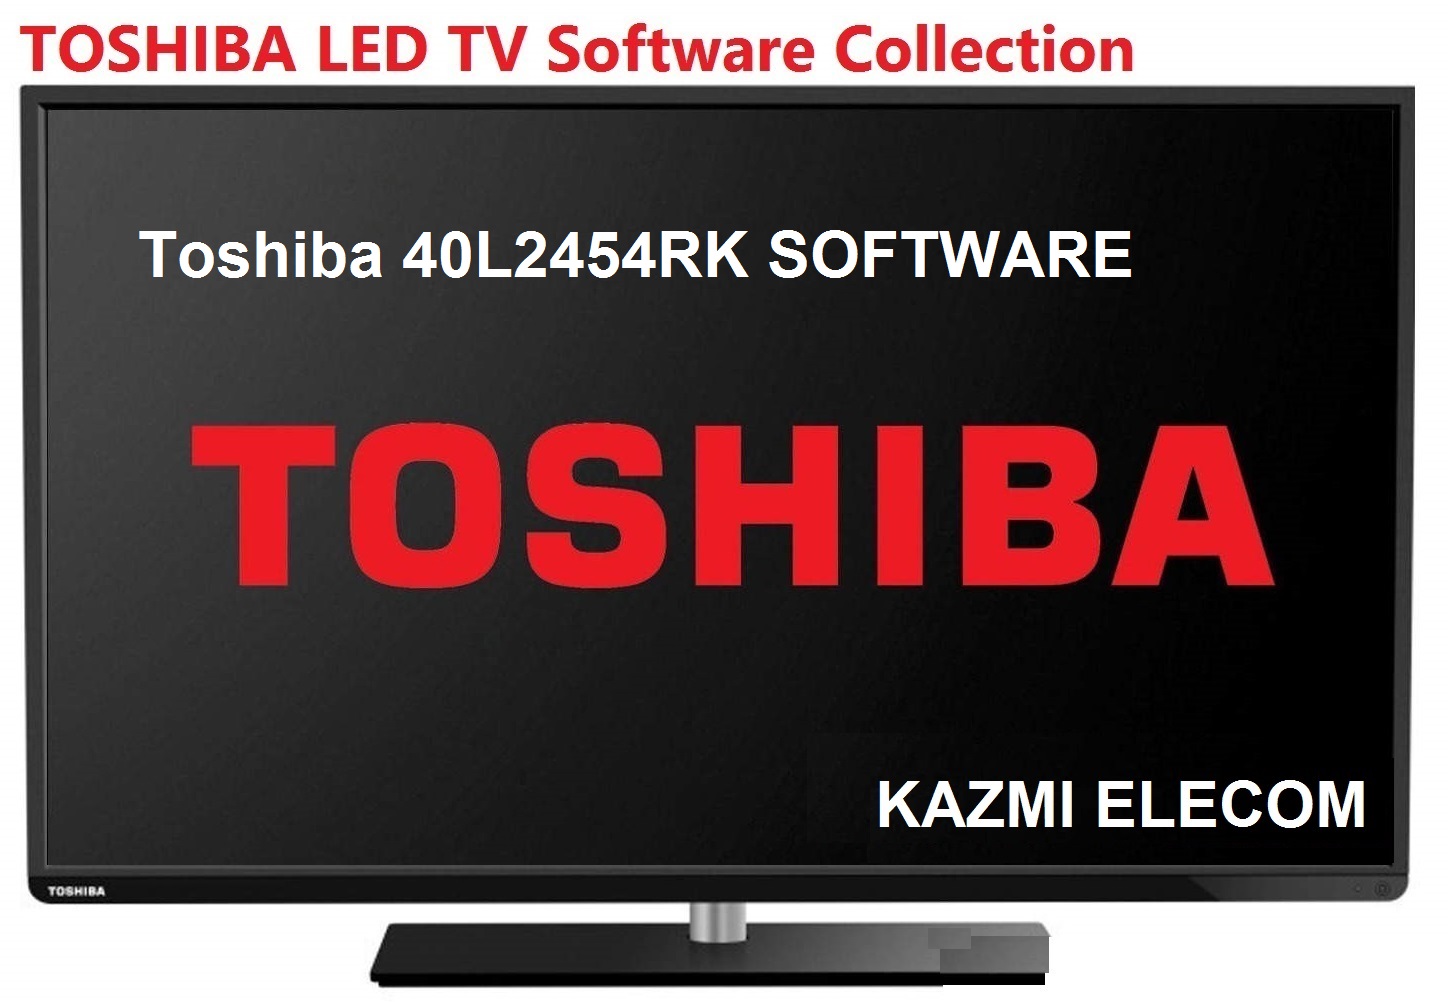 Toshiba 40L2454Rk